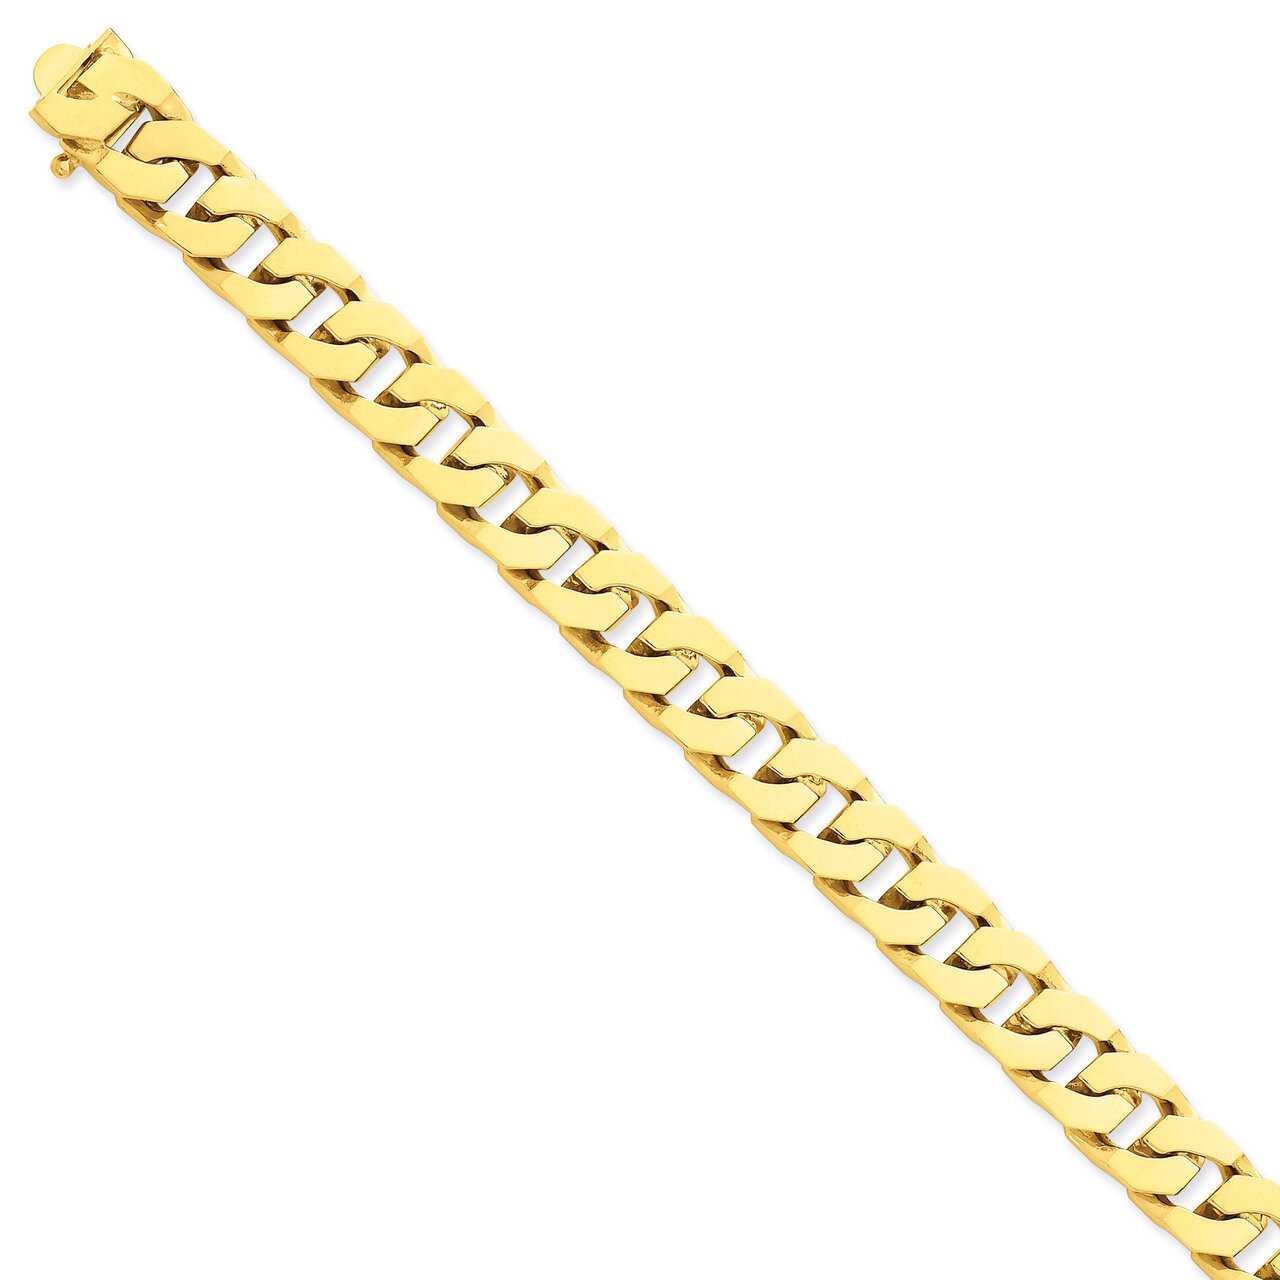 12mm Hand-Polished Fancy Link Chain 9 Inch 14k Gold LK139-9